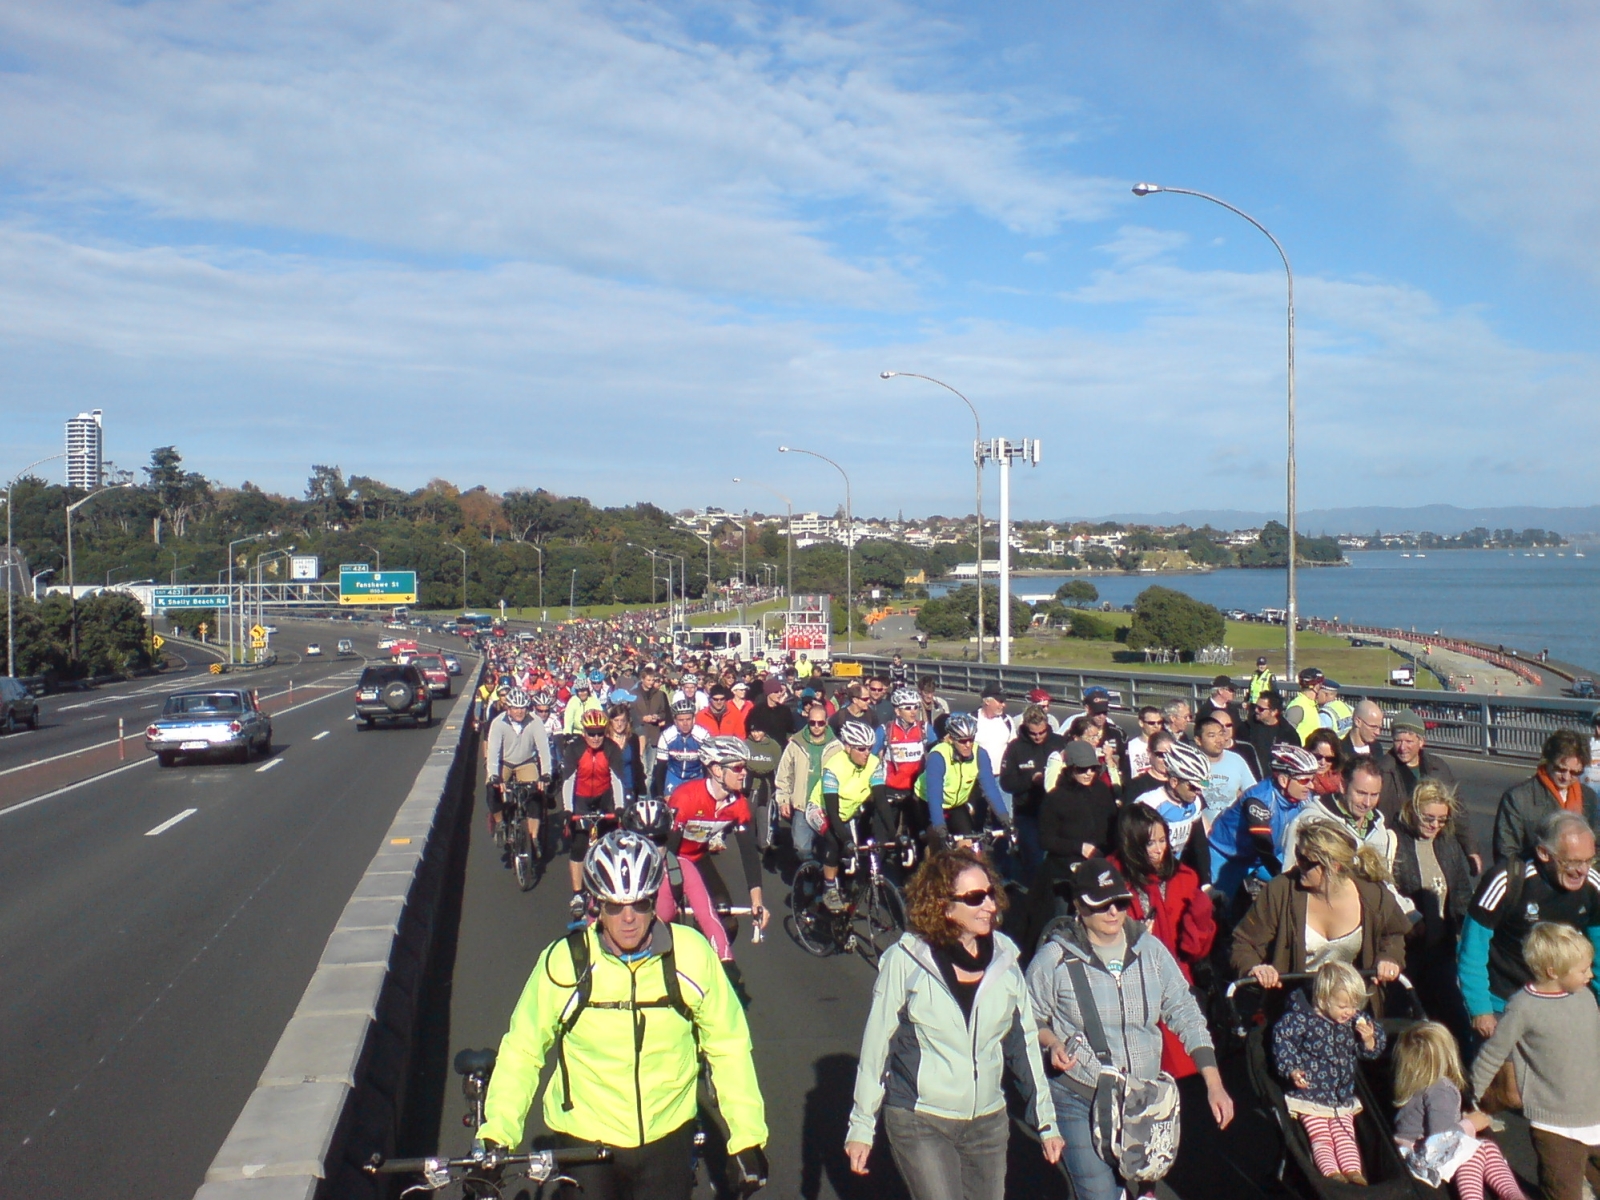 People crossing the Harbour bridge by foot and bike